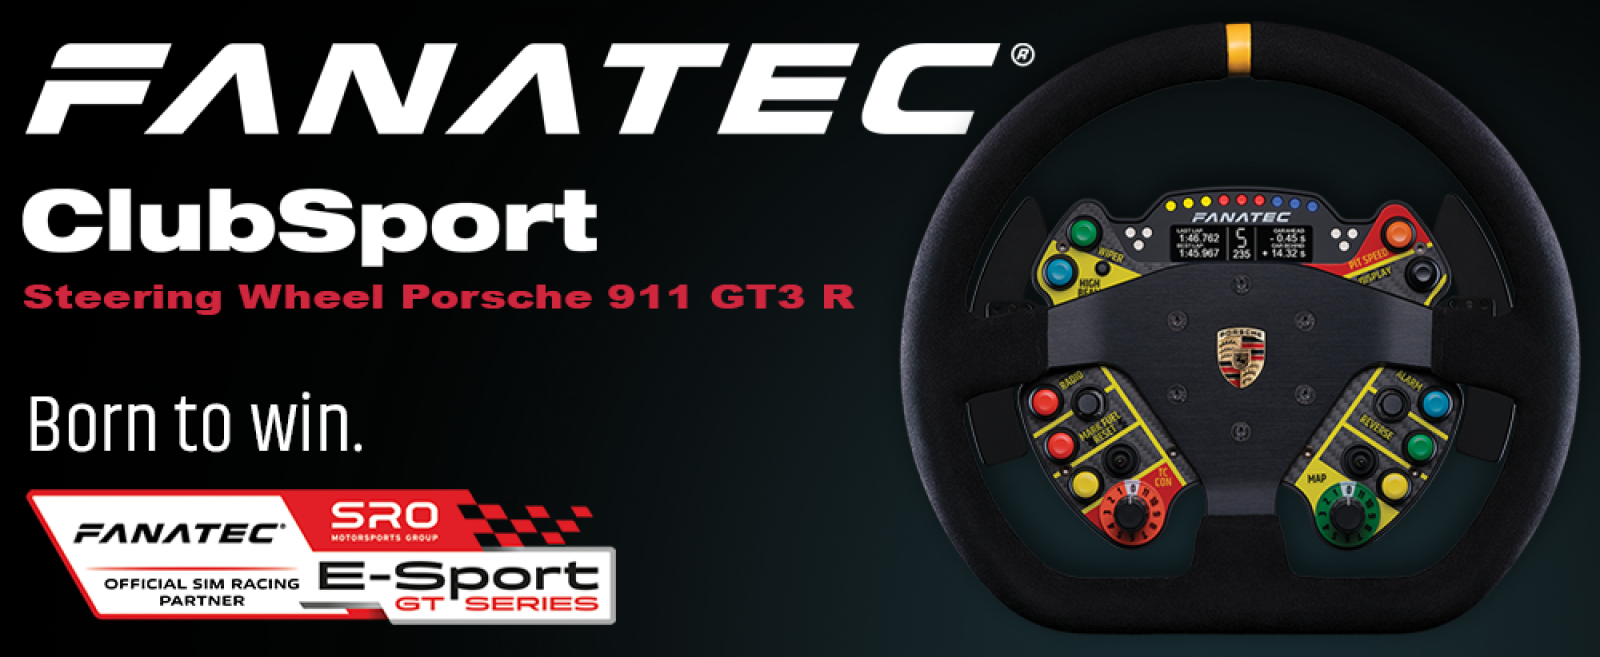 Fanatec joins SRO E-Sport GT Series as official championship partner